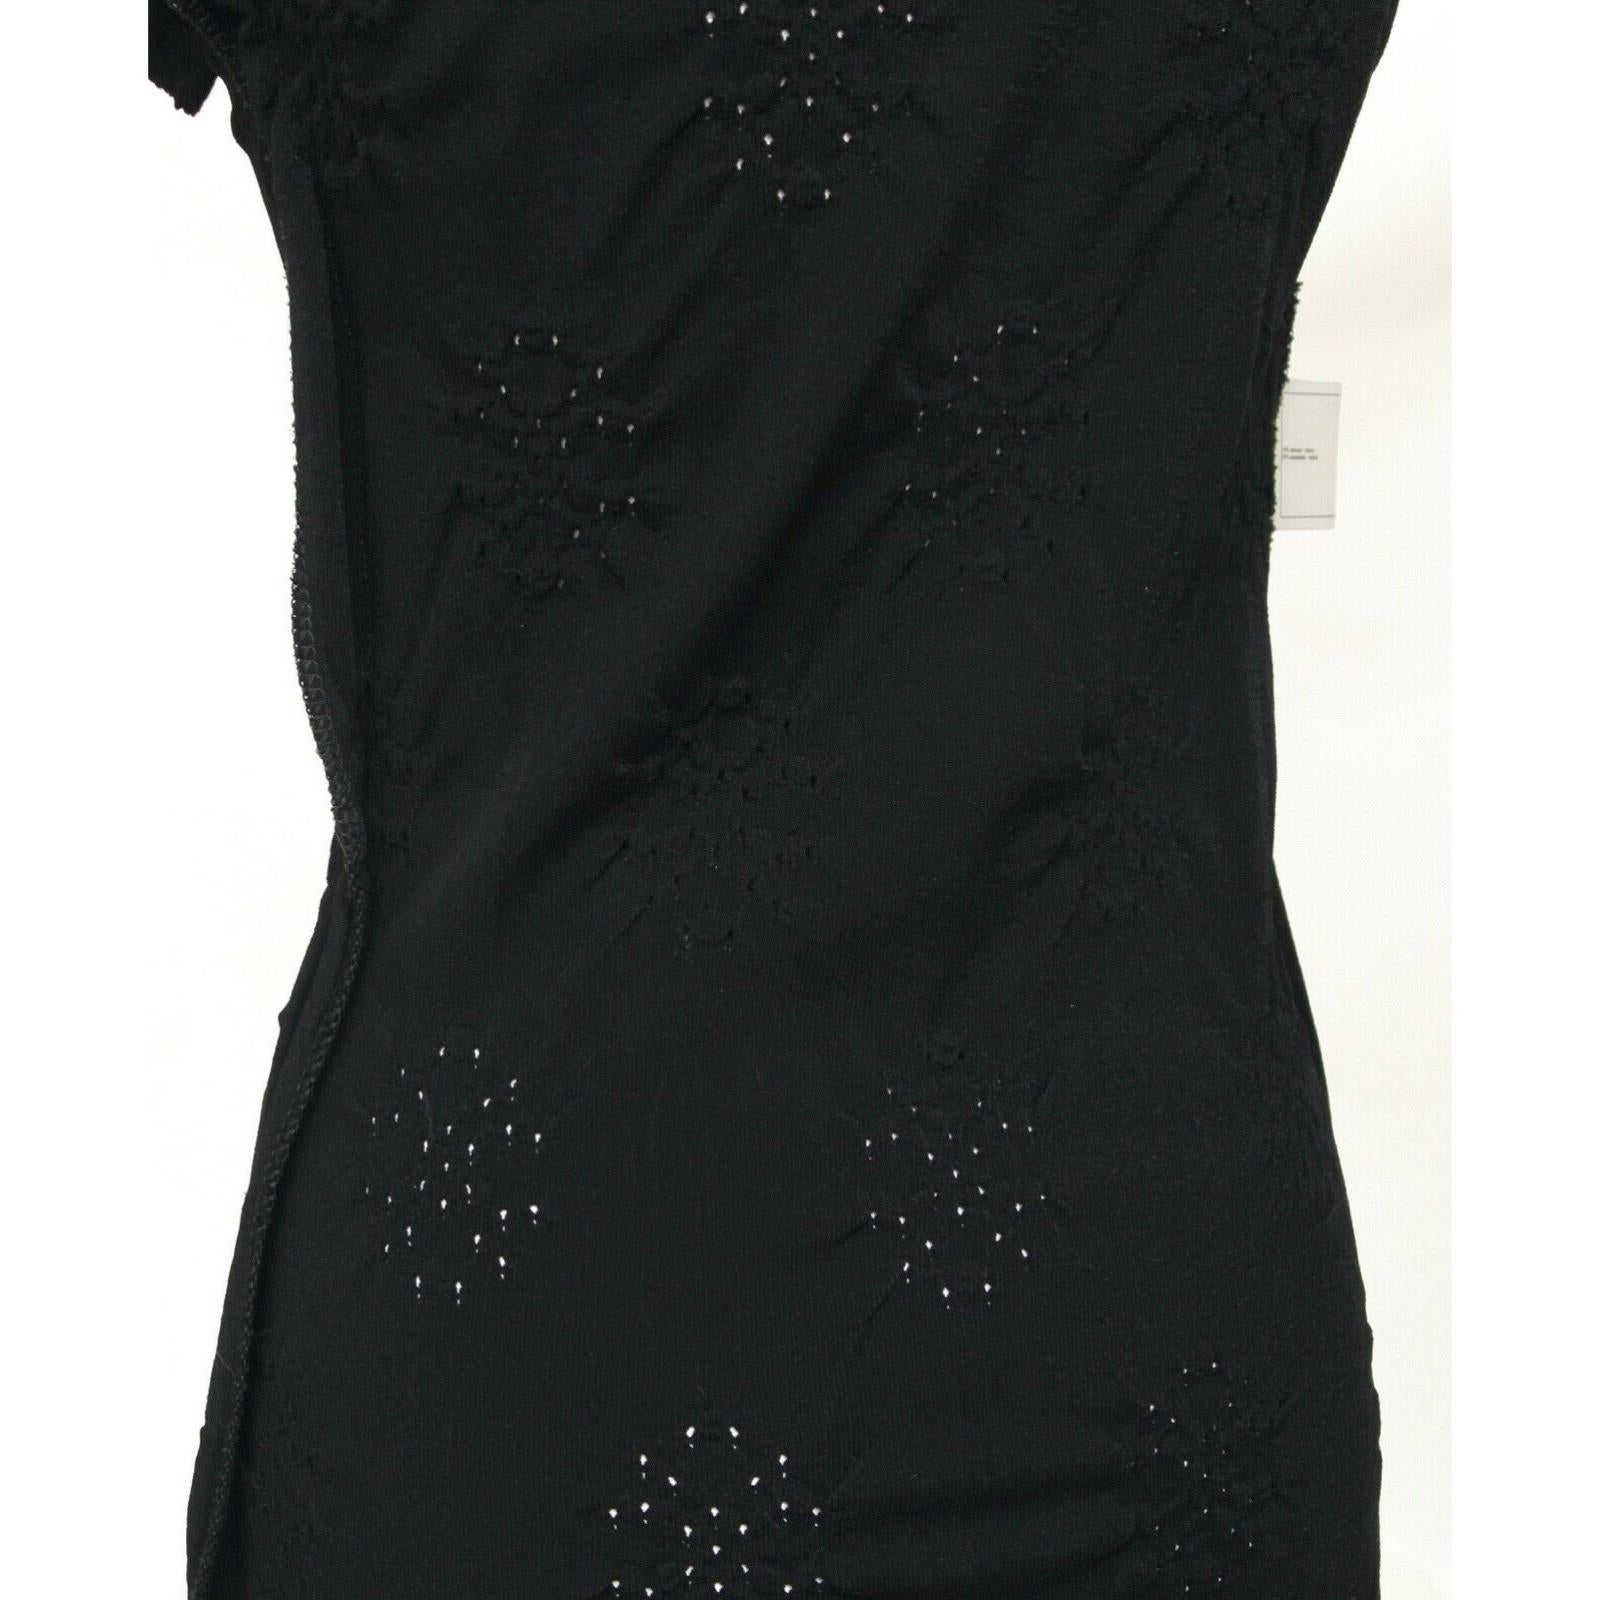 Women's CHANEL Sweater Dress Black Knit Long Sleeve Pointelle Silver 36 Cruise 2011 For Sale